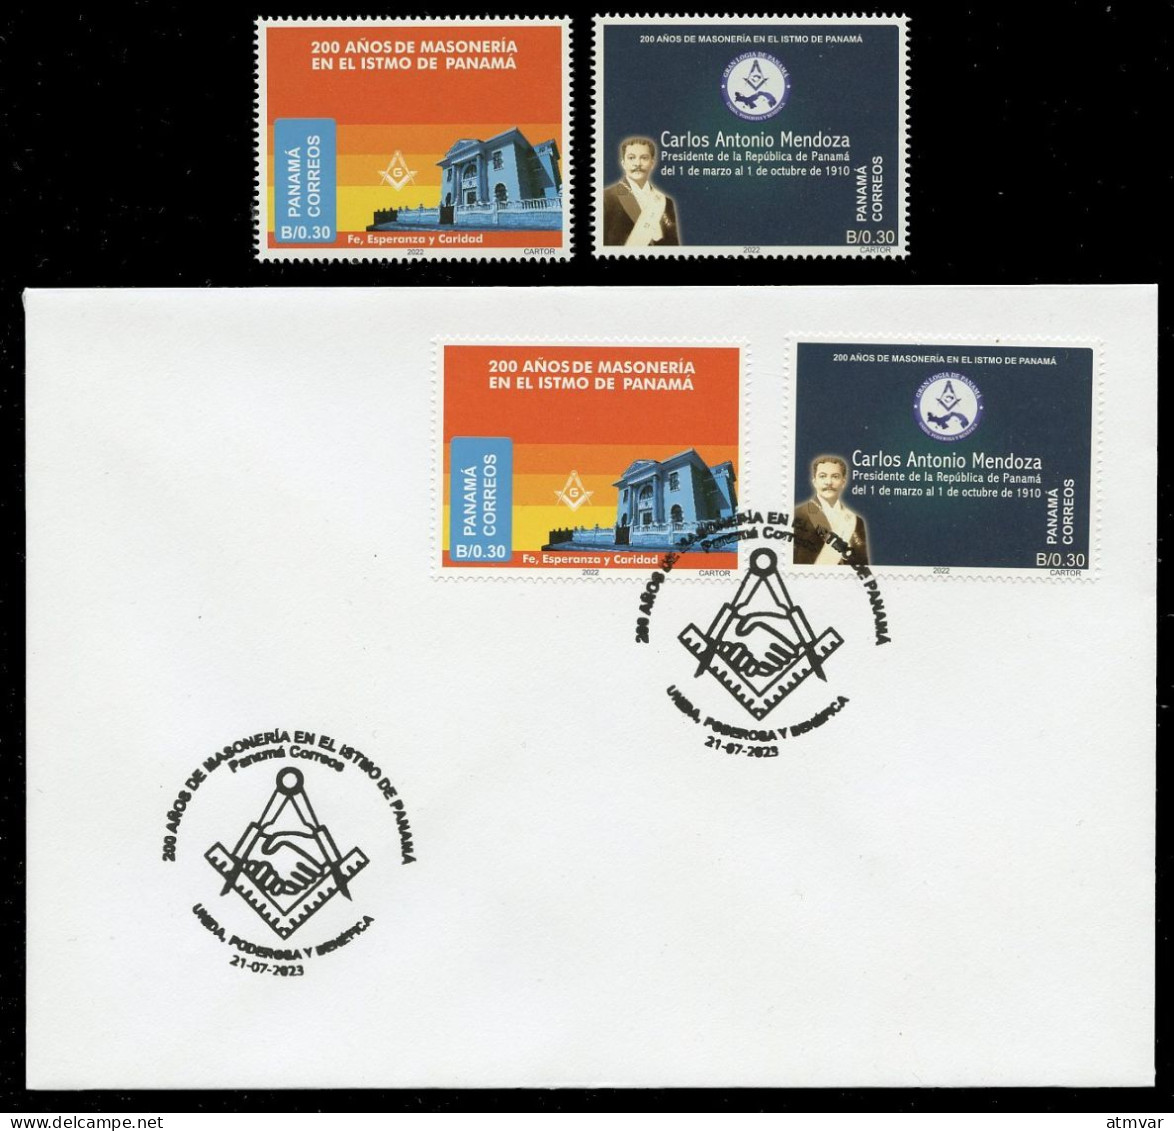 PANAMA (2023) 200 Años Masonería En Istmo Panamá, Freemasonry, Franc-maçonnerie, Freimaurerei - First Day Cover + Stamps - Panama